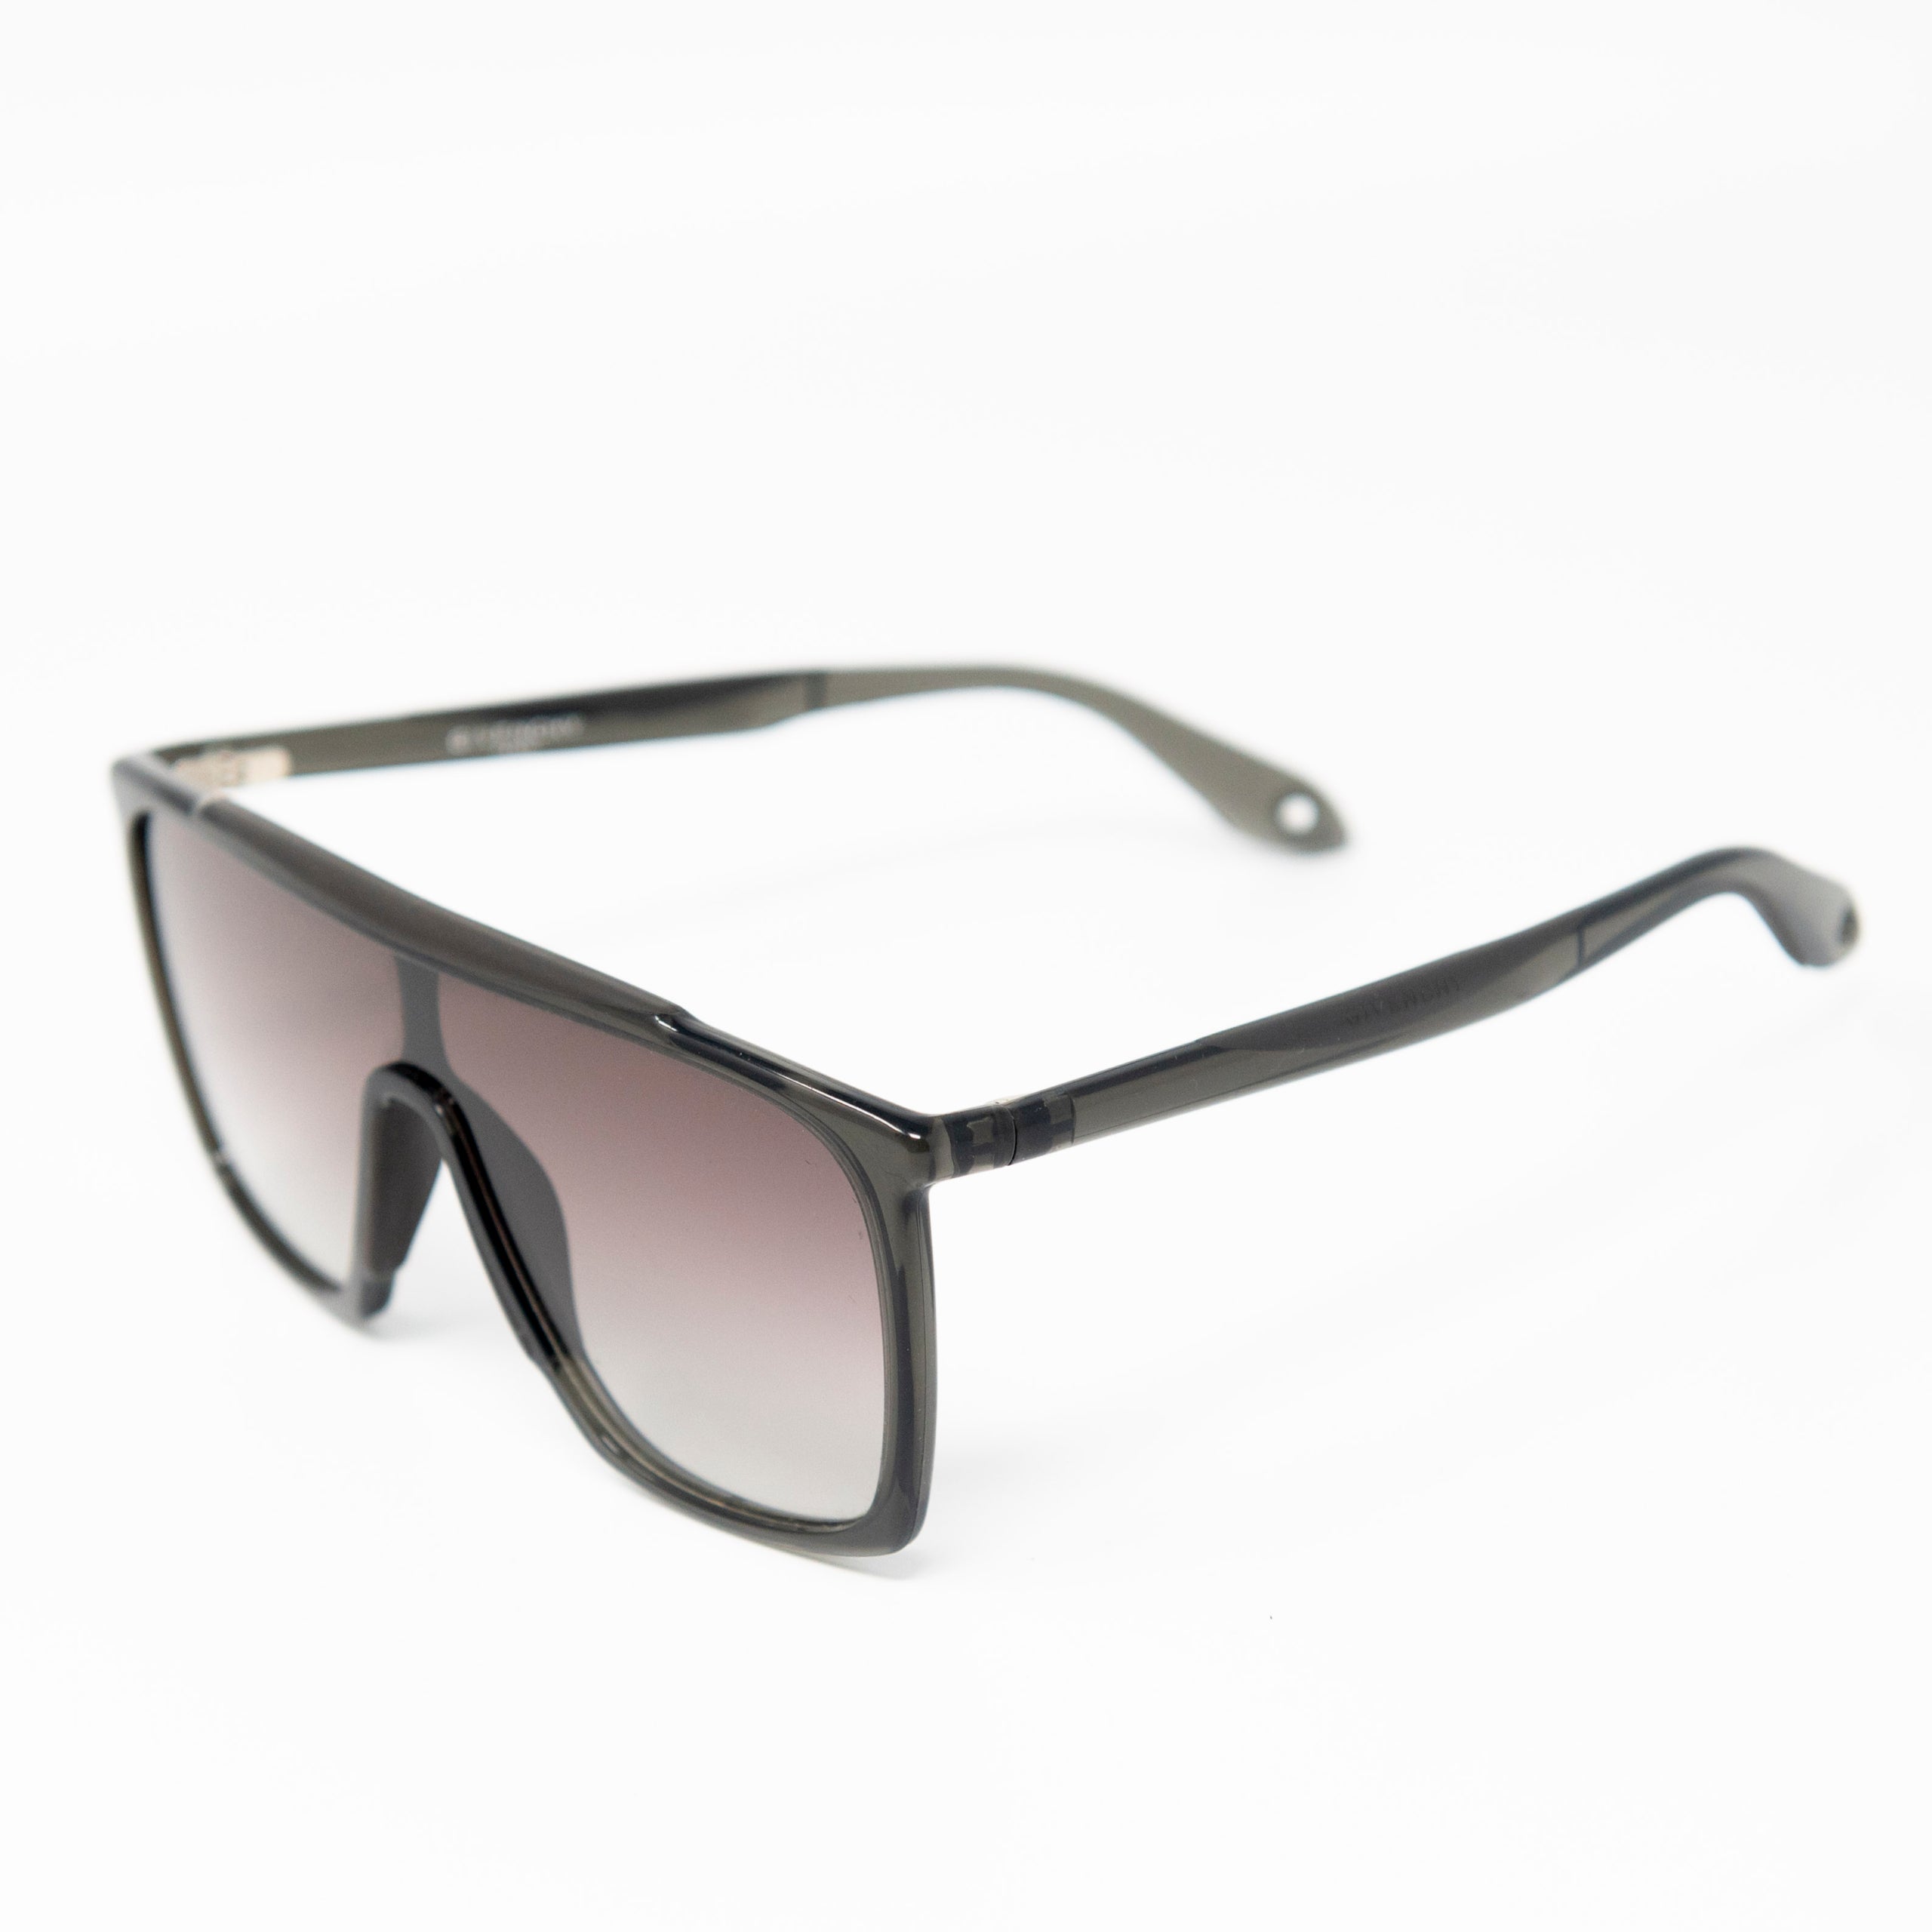 Givenchy Sunglasses GV 7040